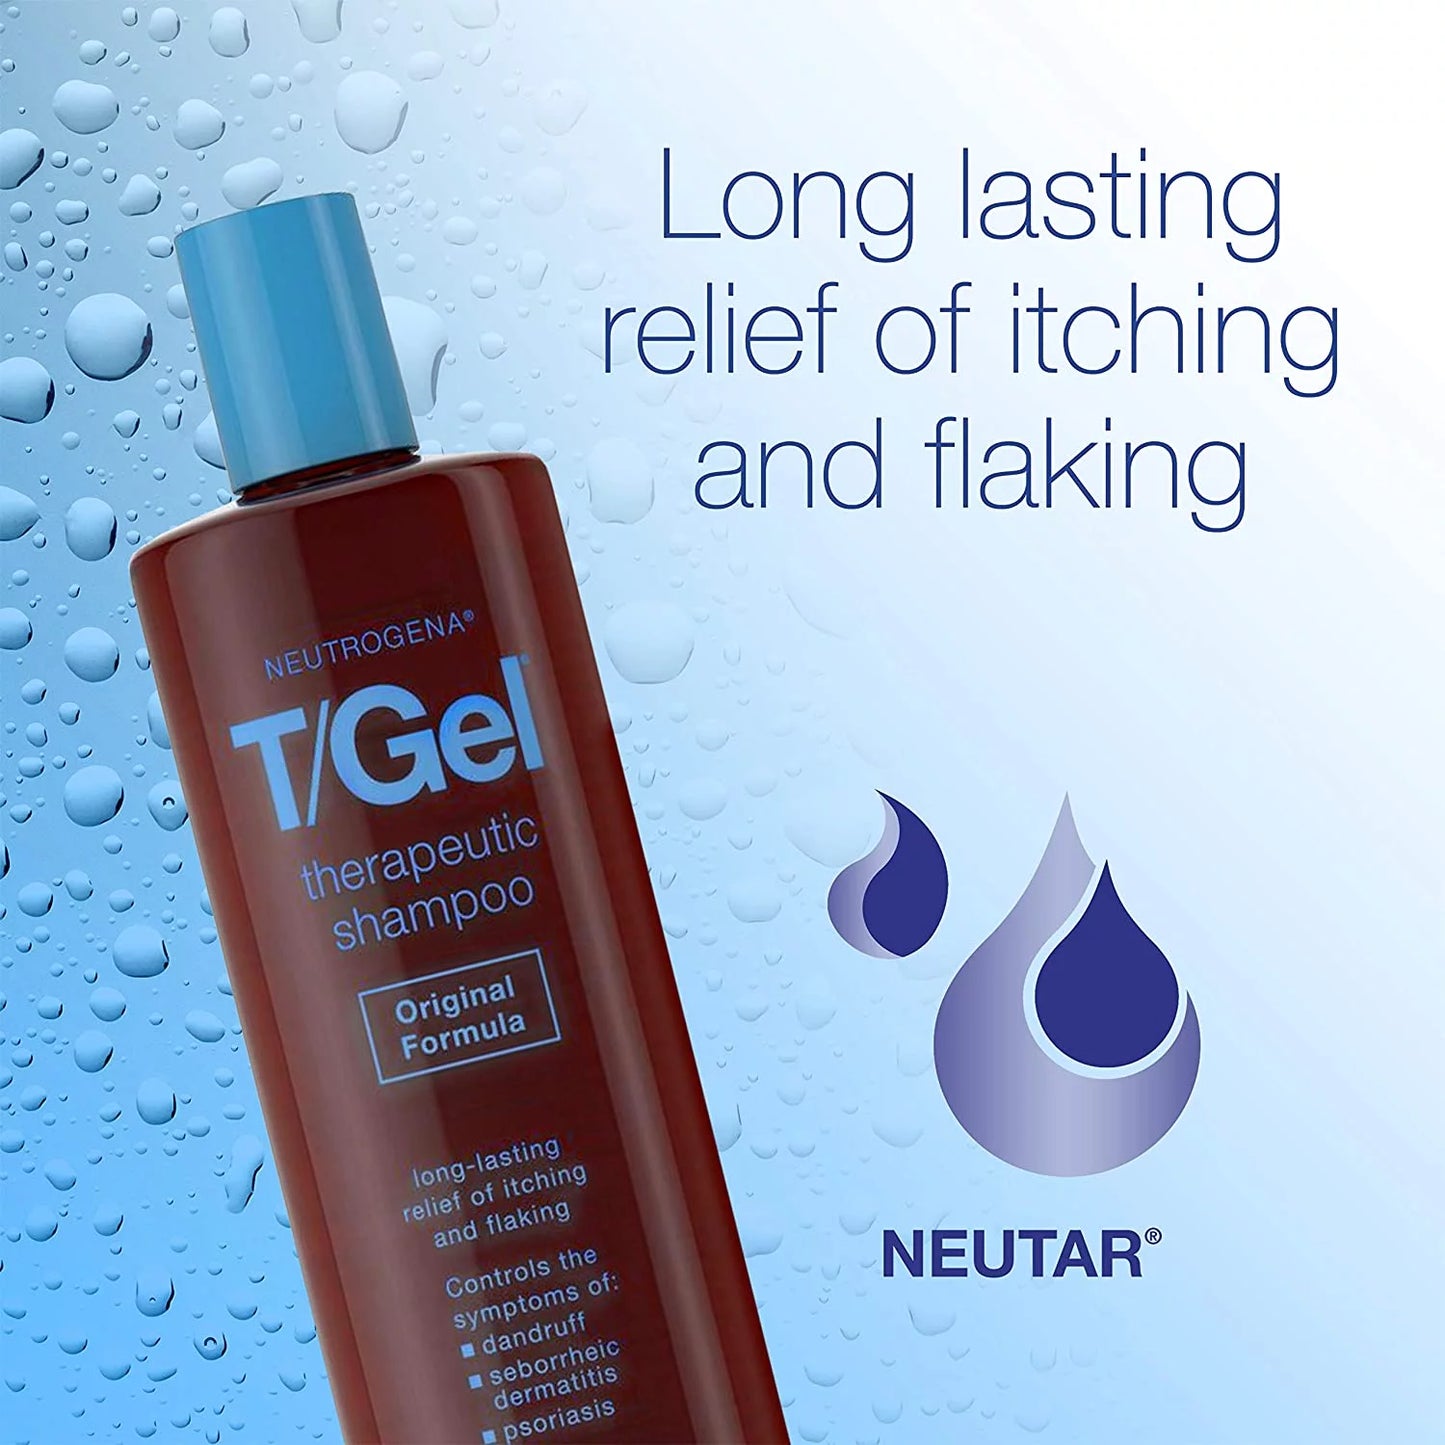 2 Pack - Neutrogena T/Gel Therapeutic Shampoo Original Formula 8.50 oz